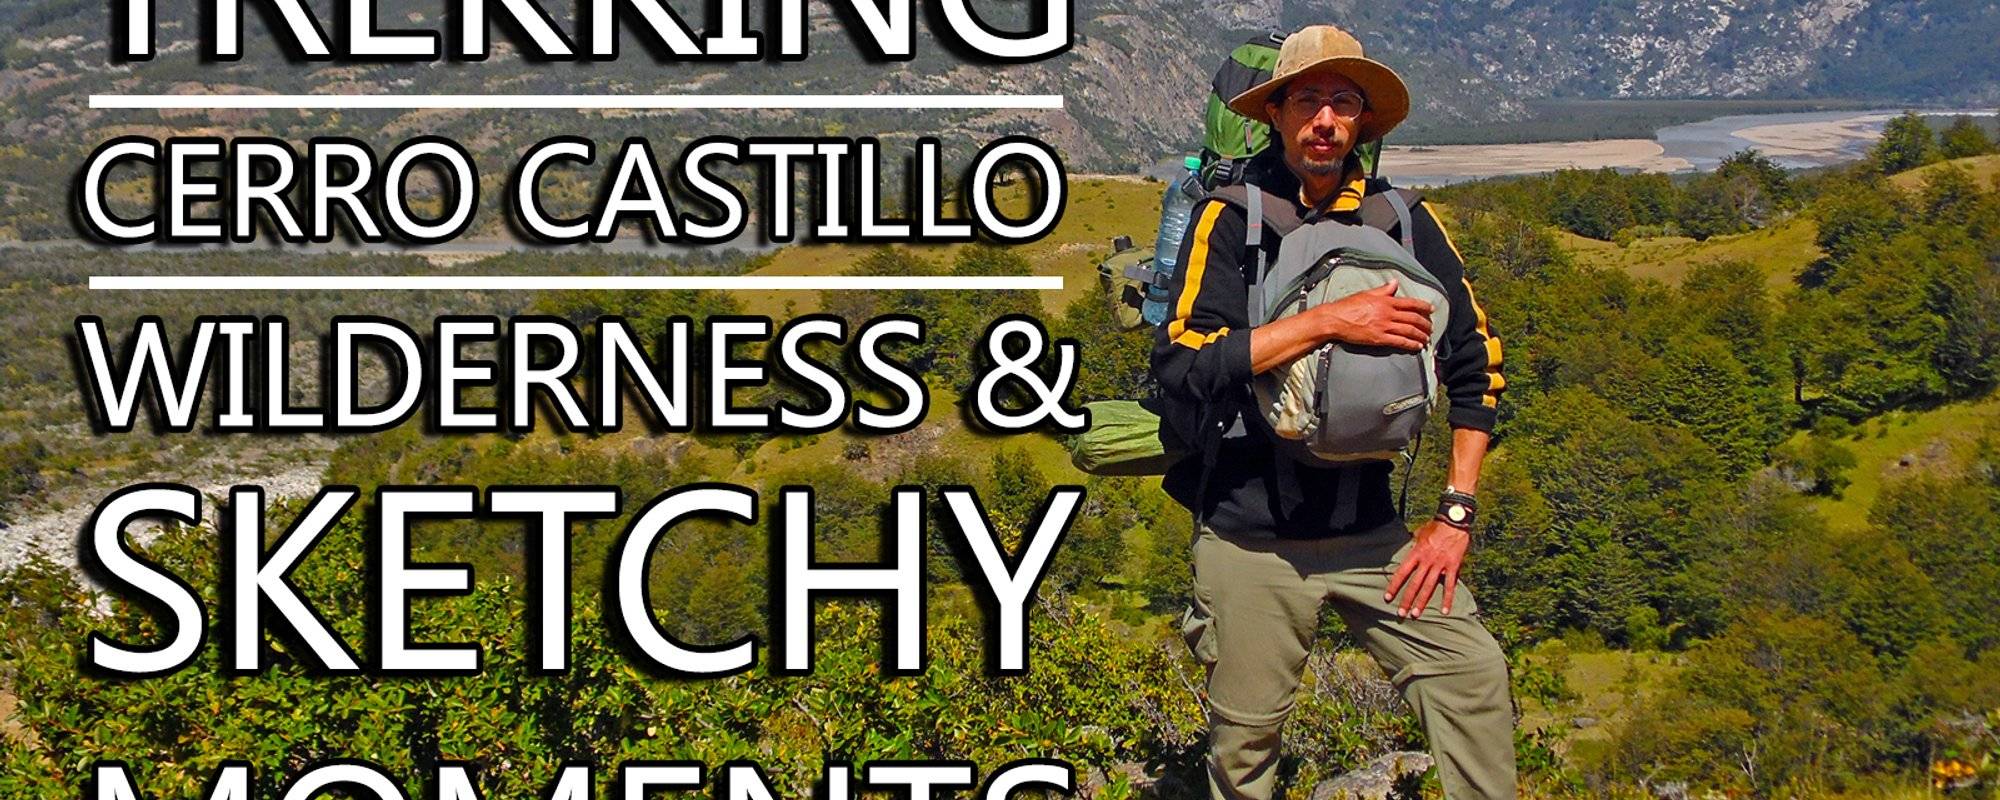 Travel Story: Hitchhiking Villa Cerro Castillo (Part II)